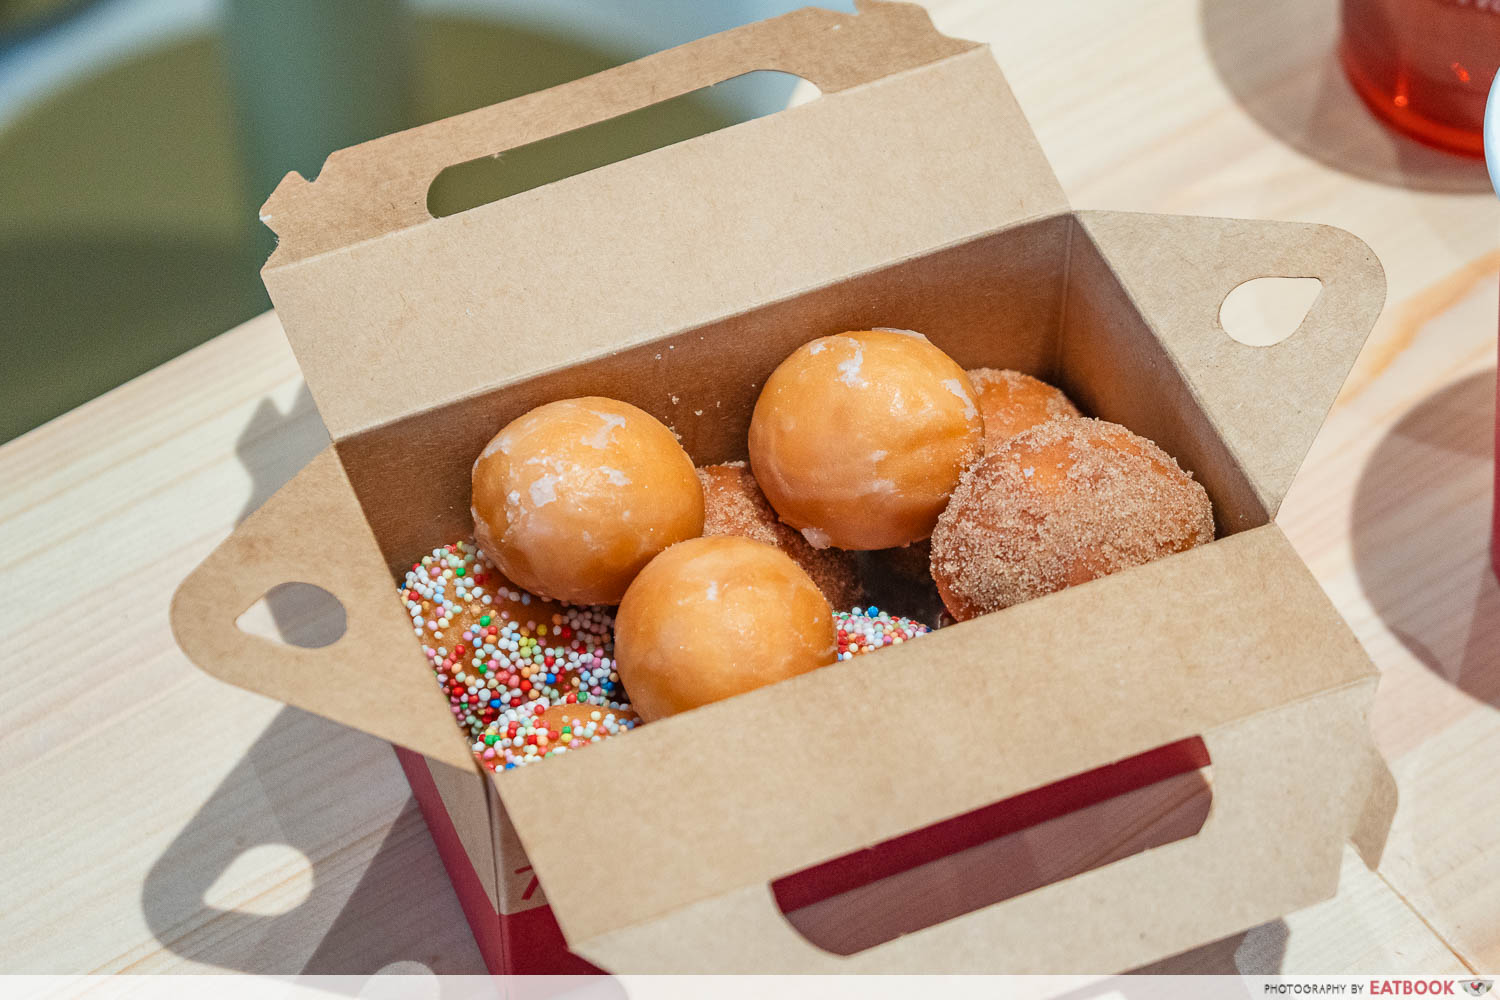 tim hortons - doughnuts in box